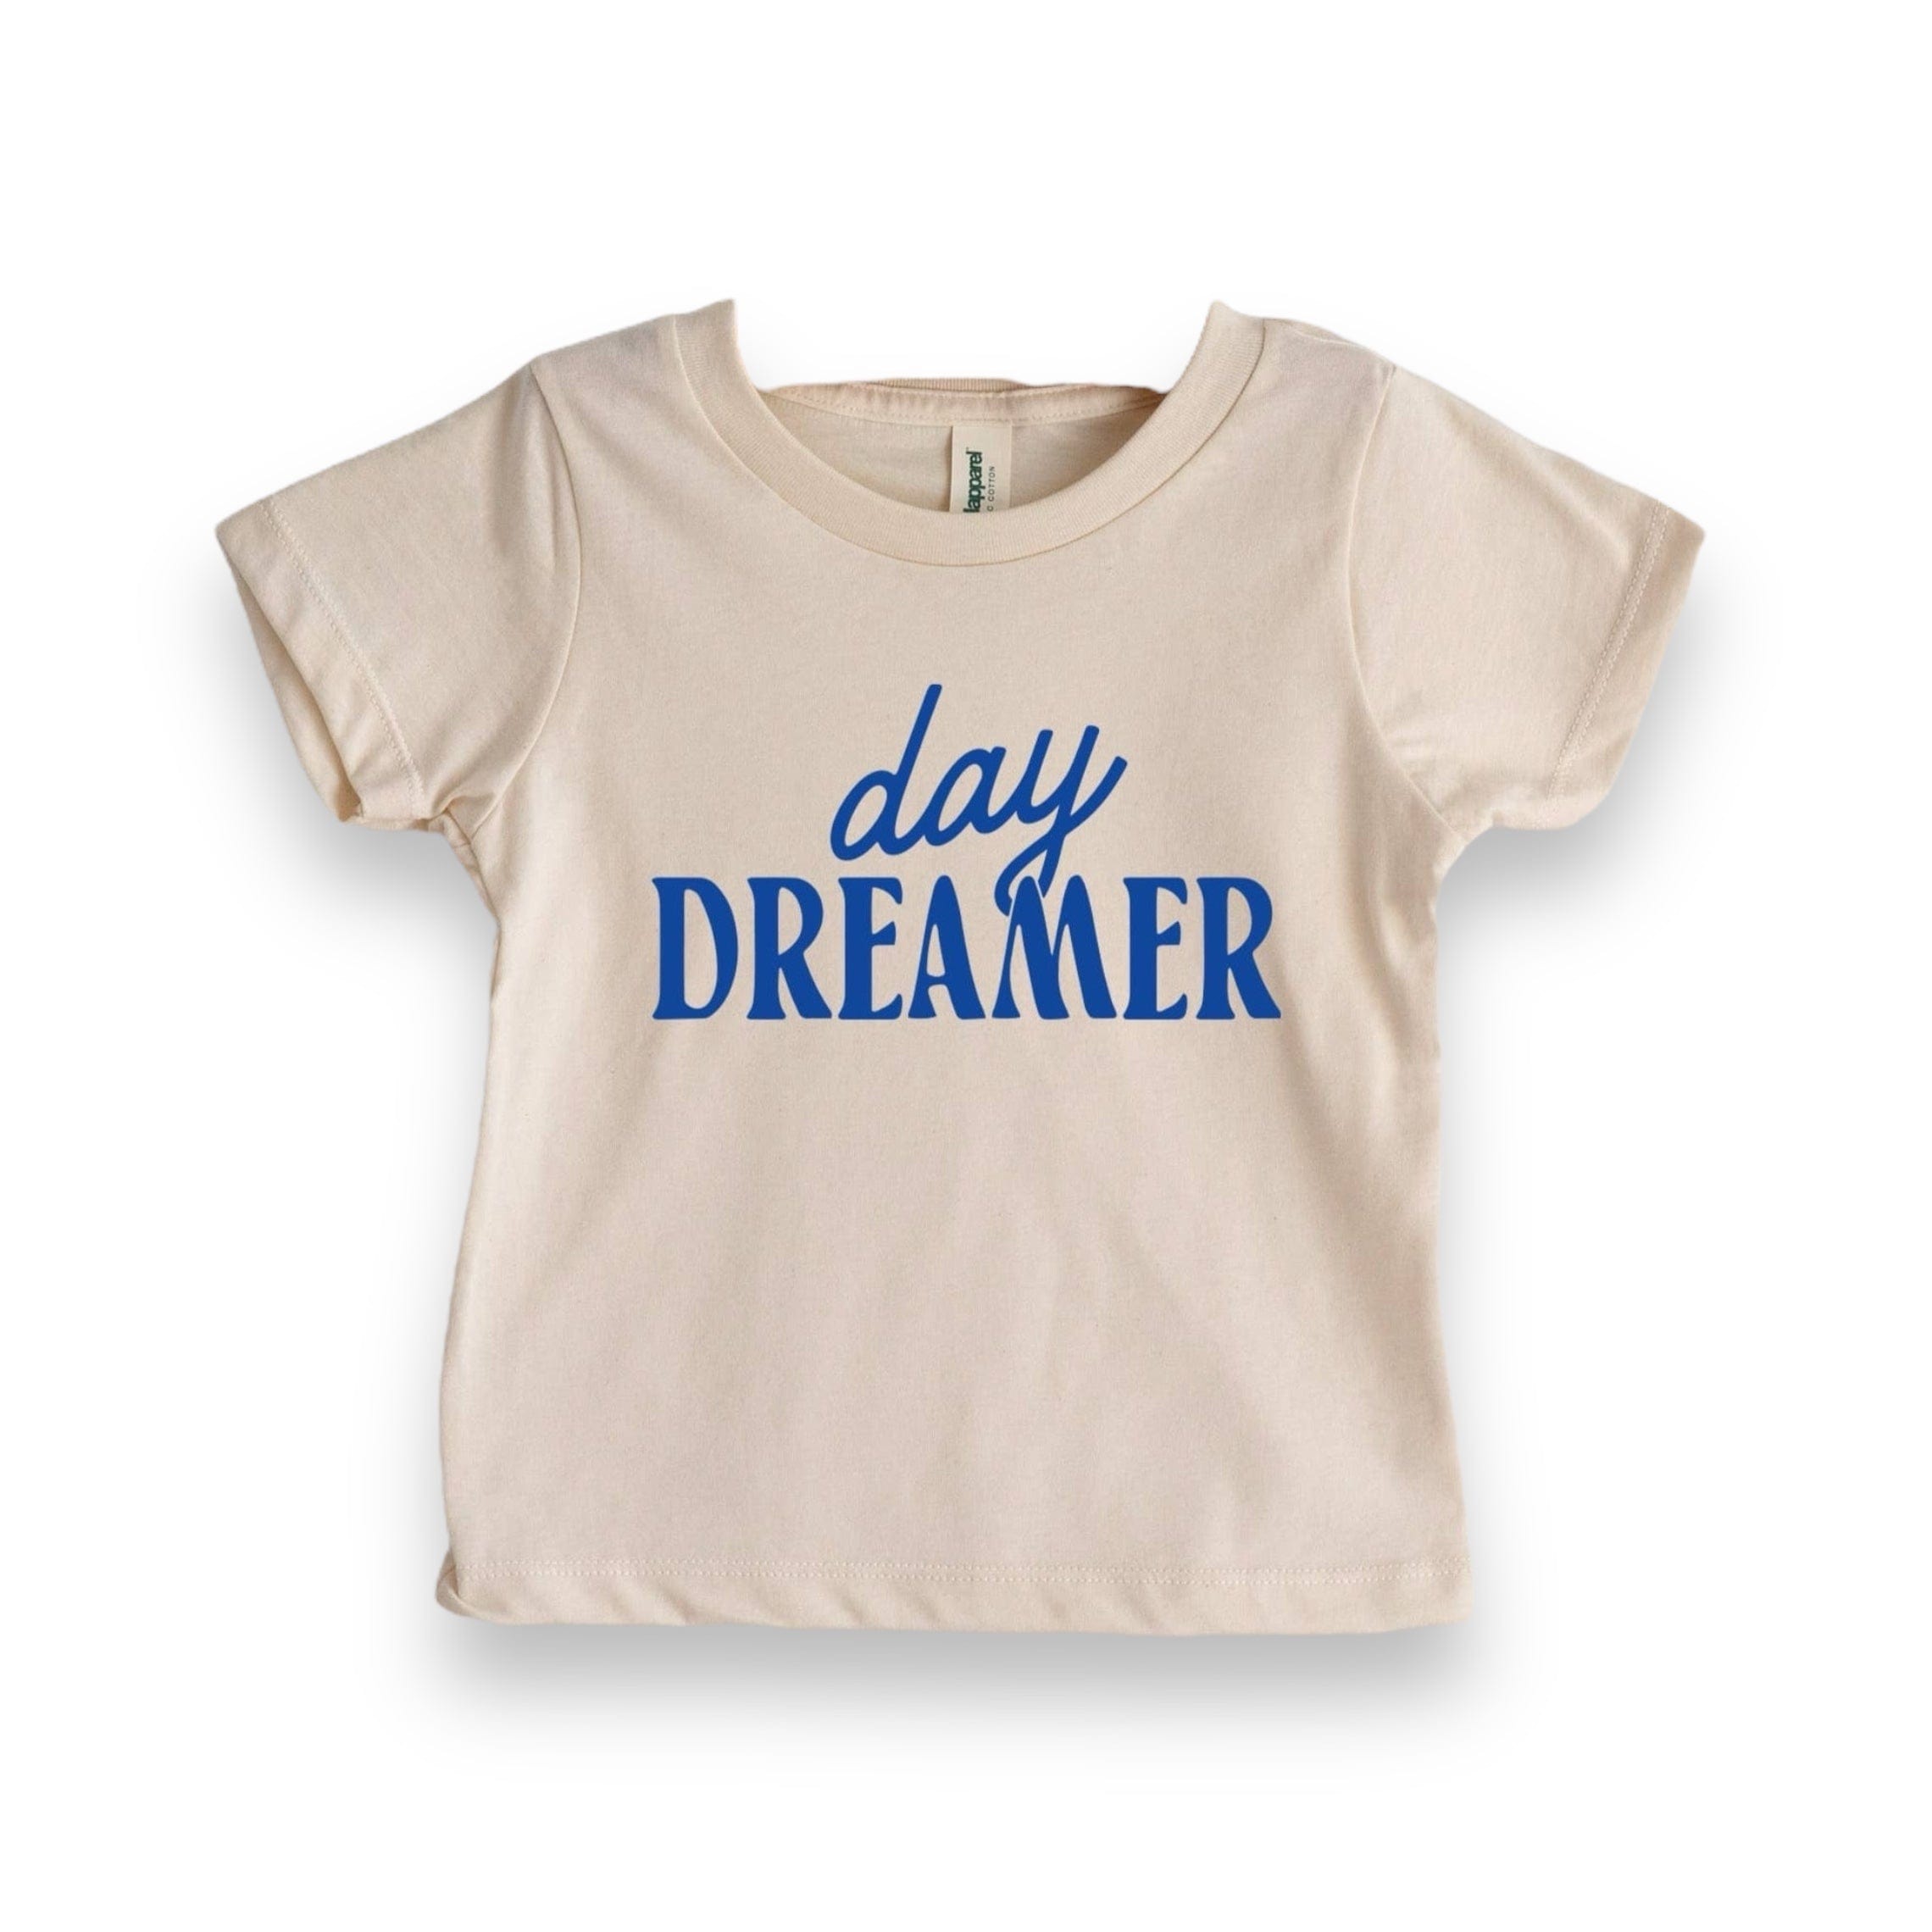 Daydreamer Modern Cream Organic Kids Tee by Gladfolk